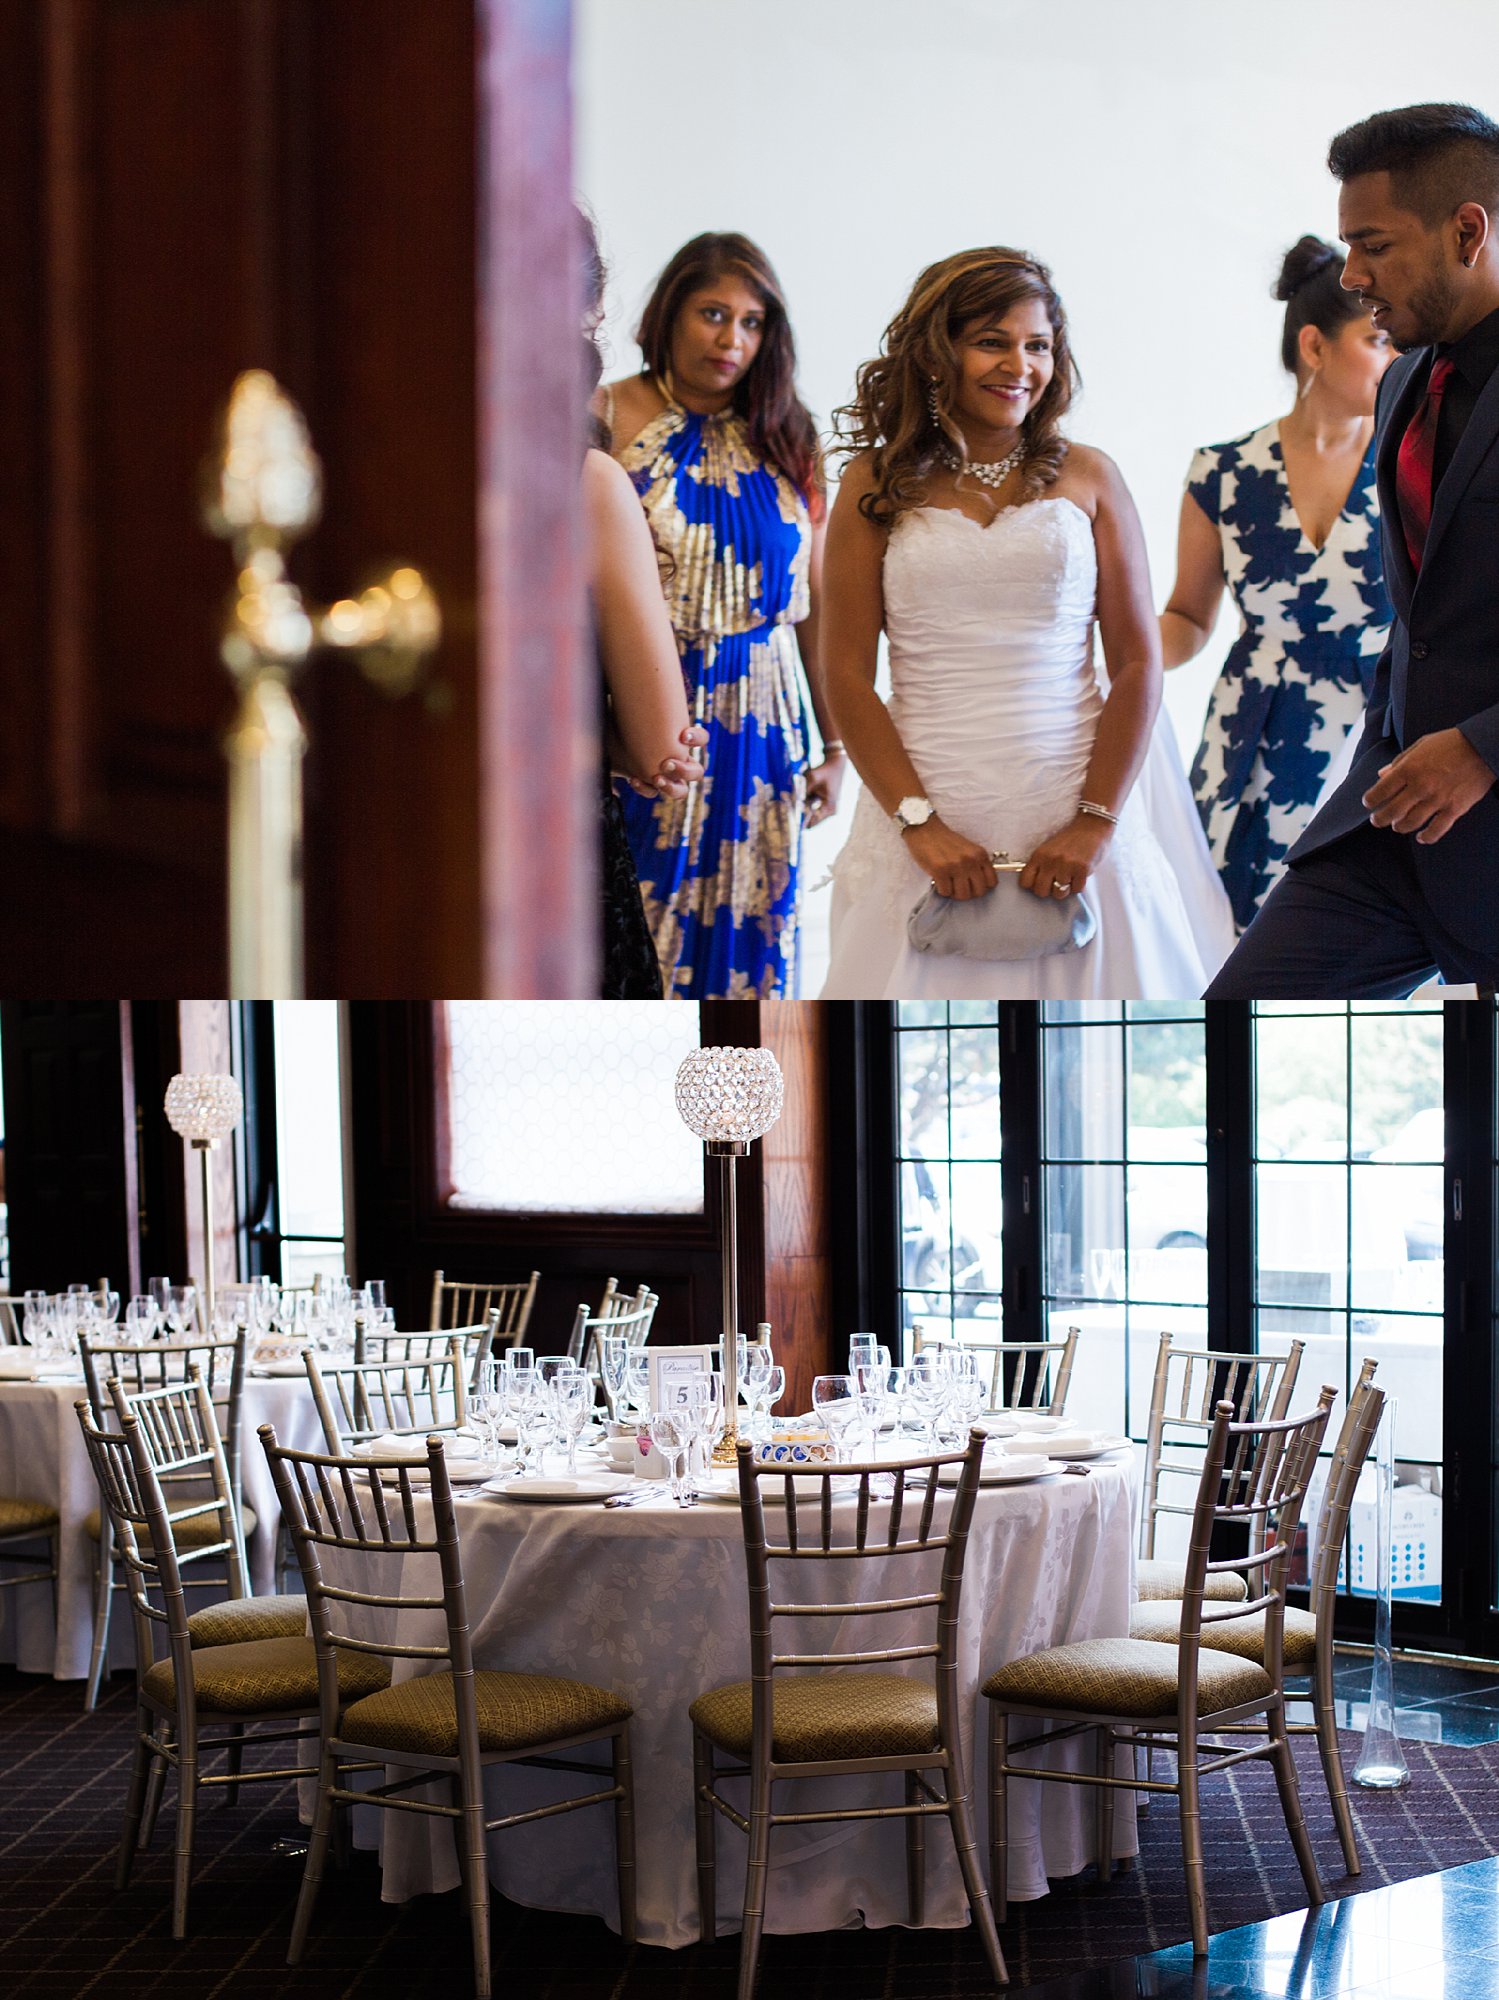 Jennifer Blaak Photography, Paradise Banquet Hall, Wedding Reception, Surprise Wedding, Bride in doorway, Table Settings